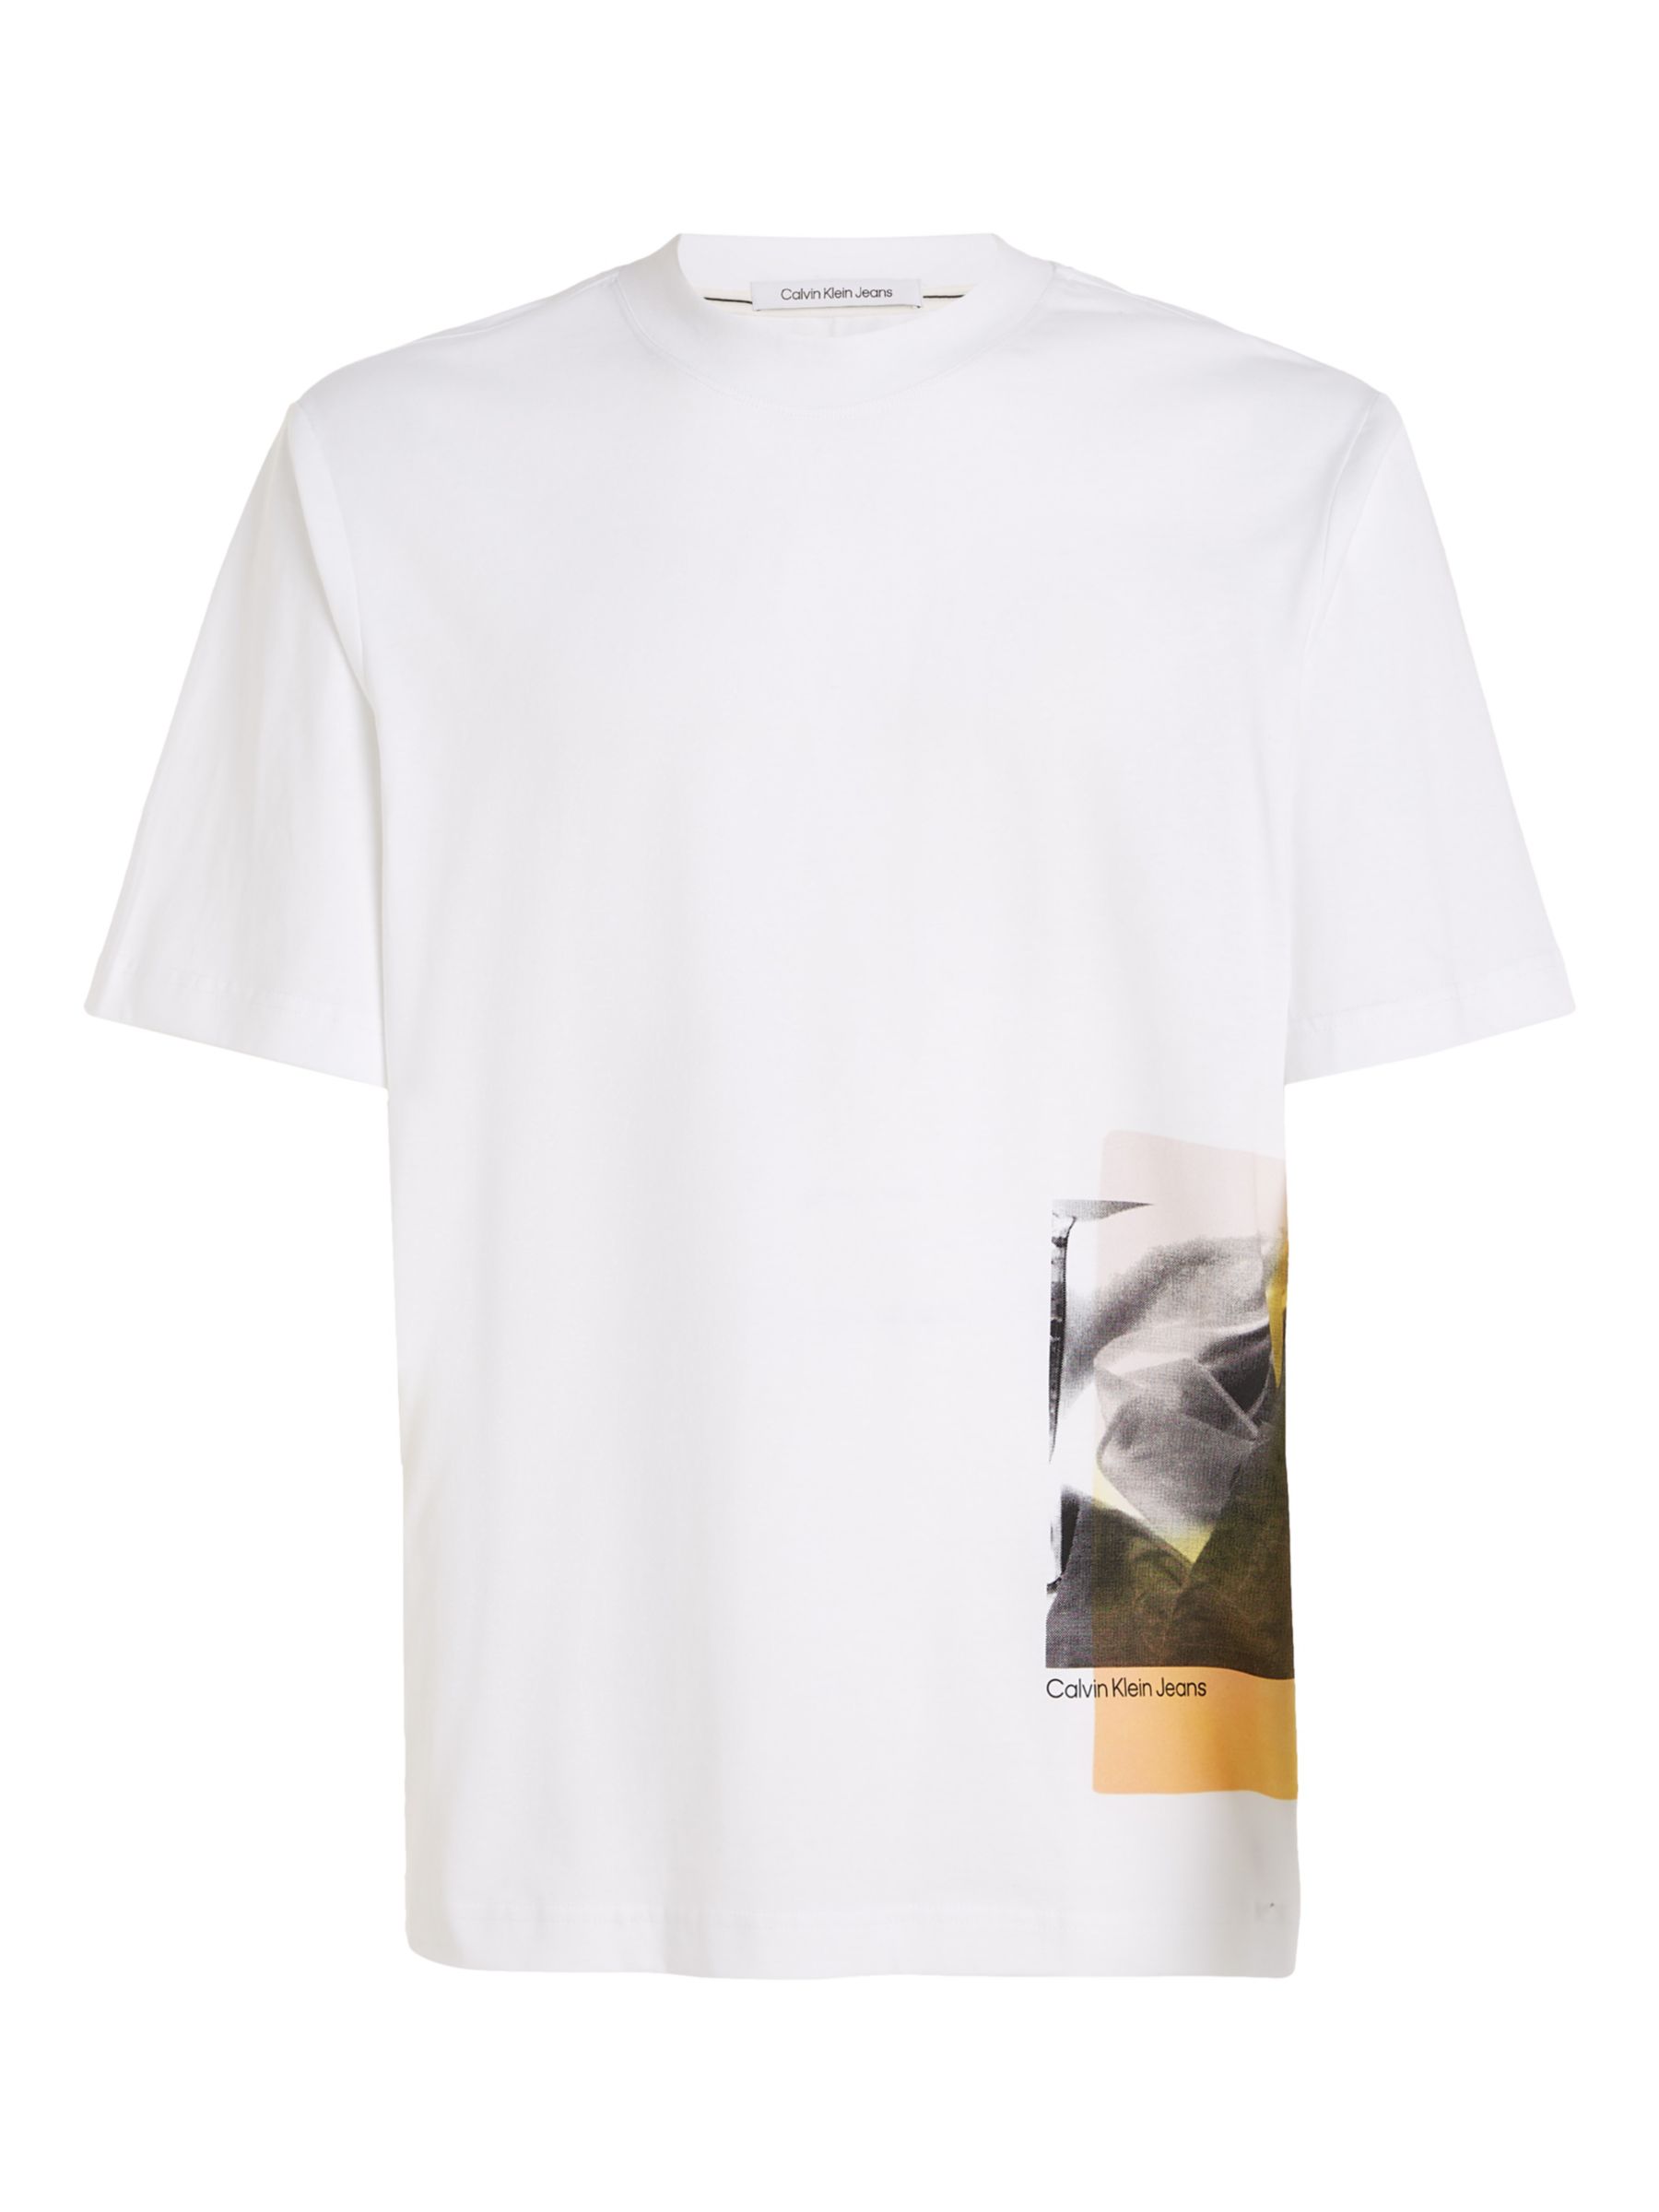 Calvin Klein Jeans NYC Print T-Shirt, Bright White at John Lewis & Partners